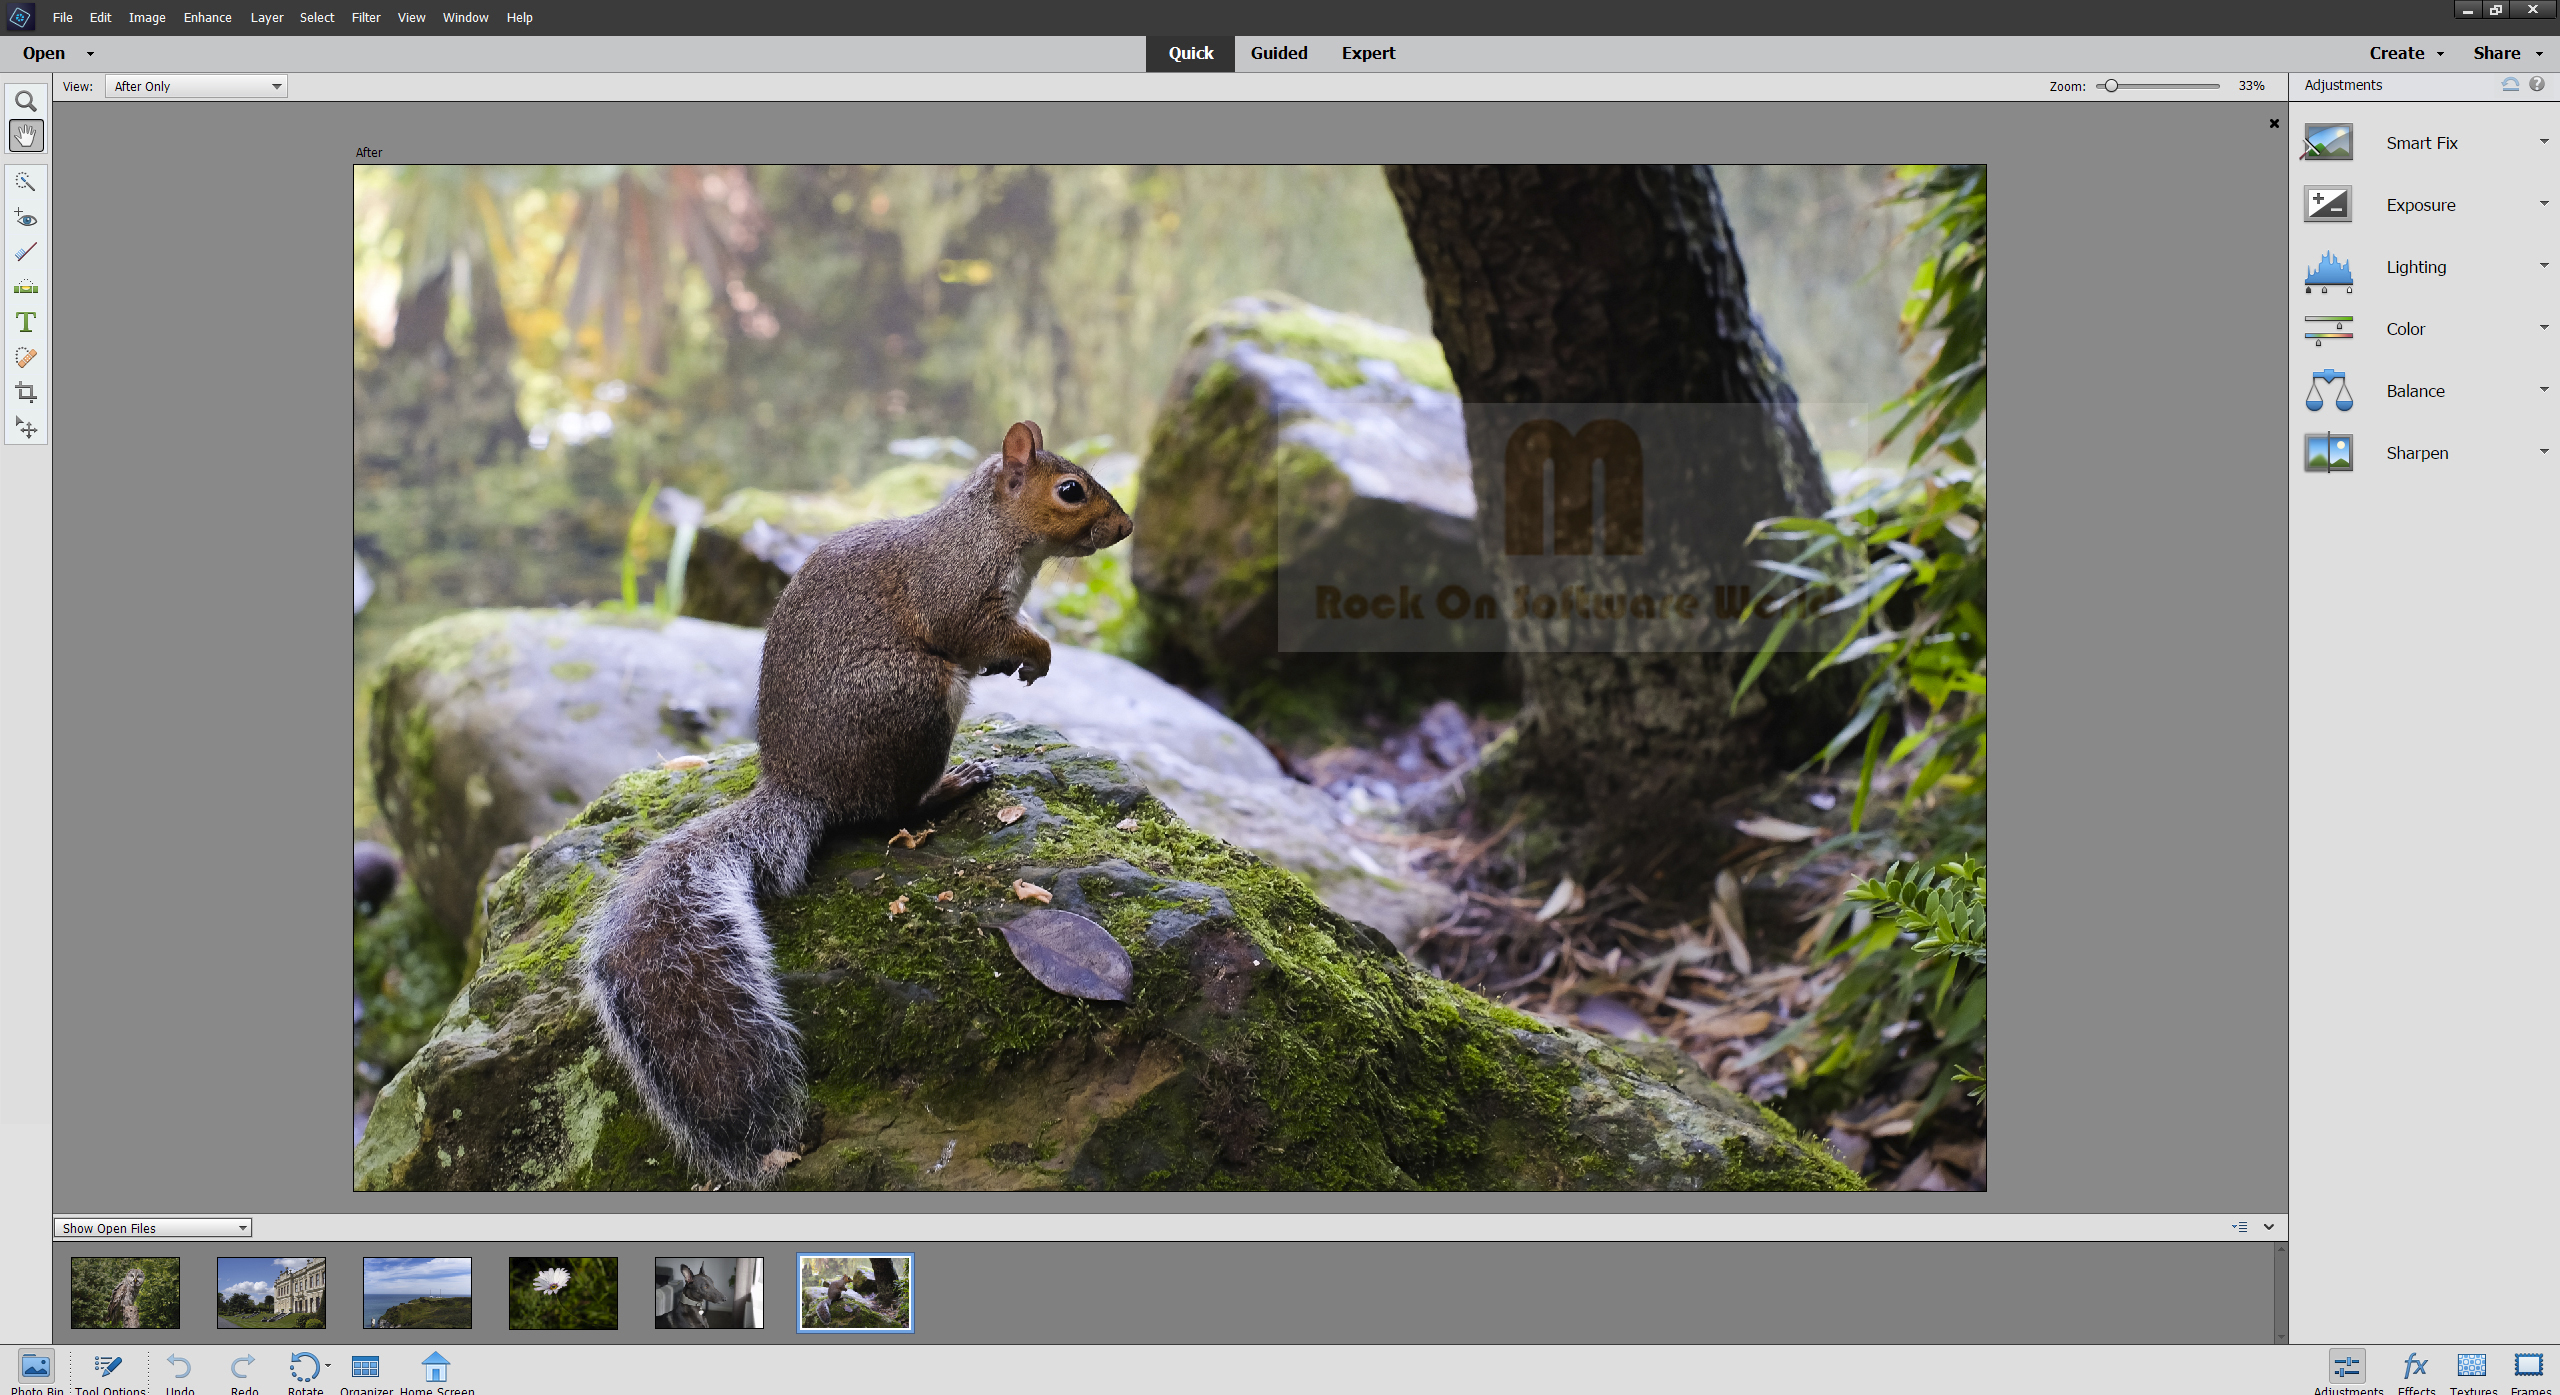 Adobe photoshop elements 10 mac download free